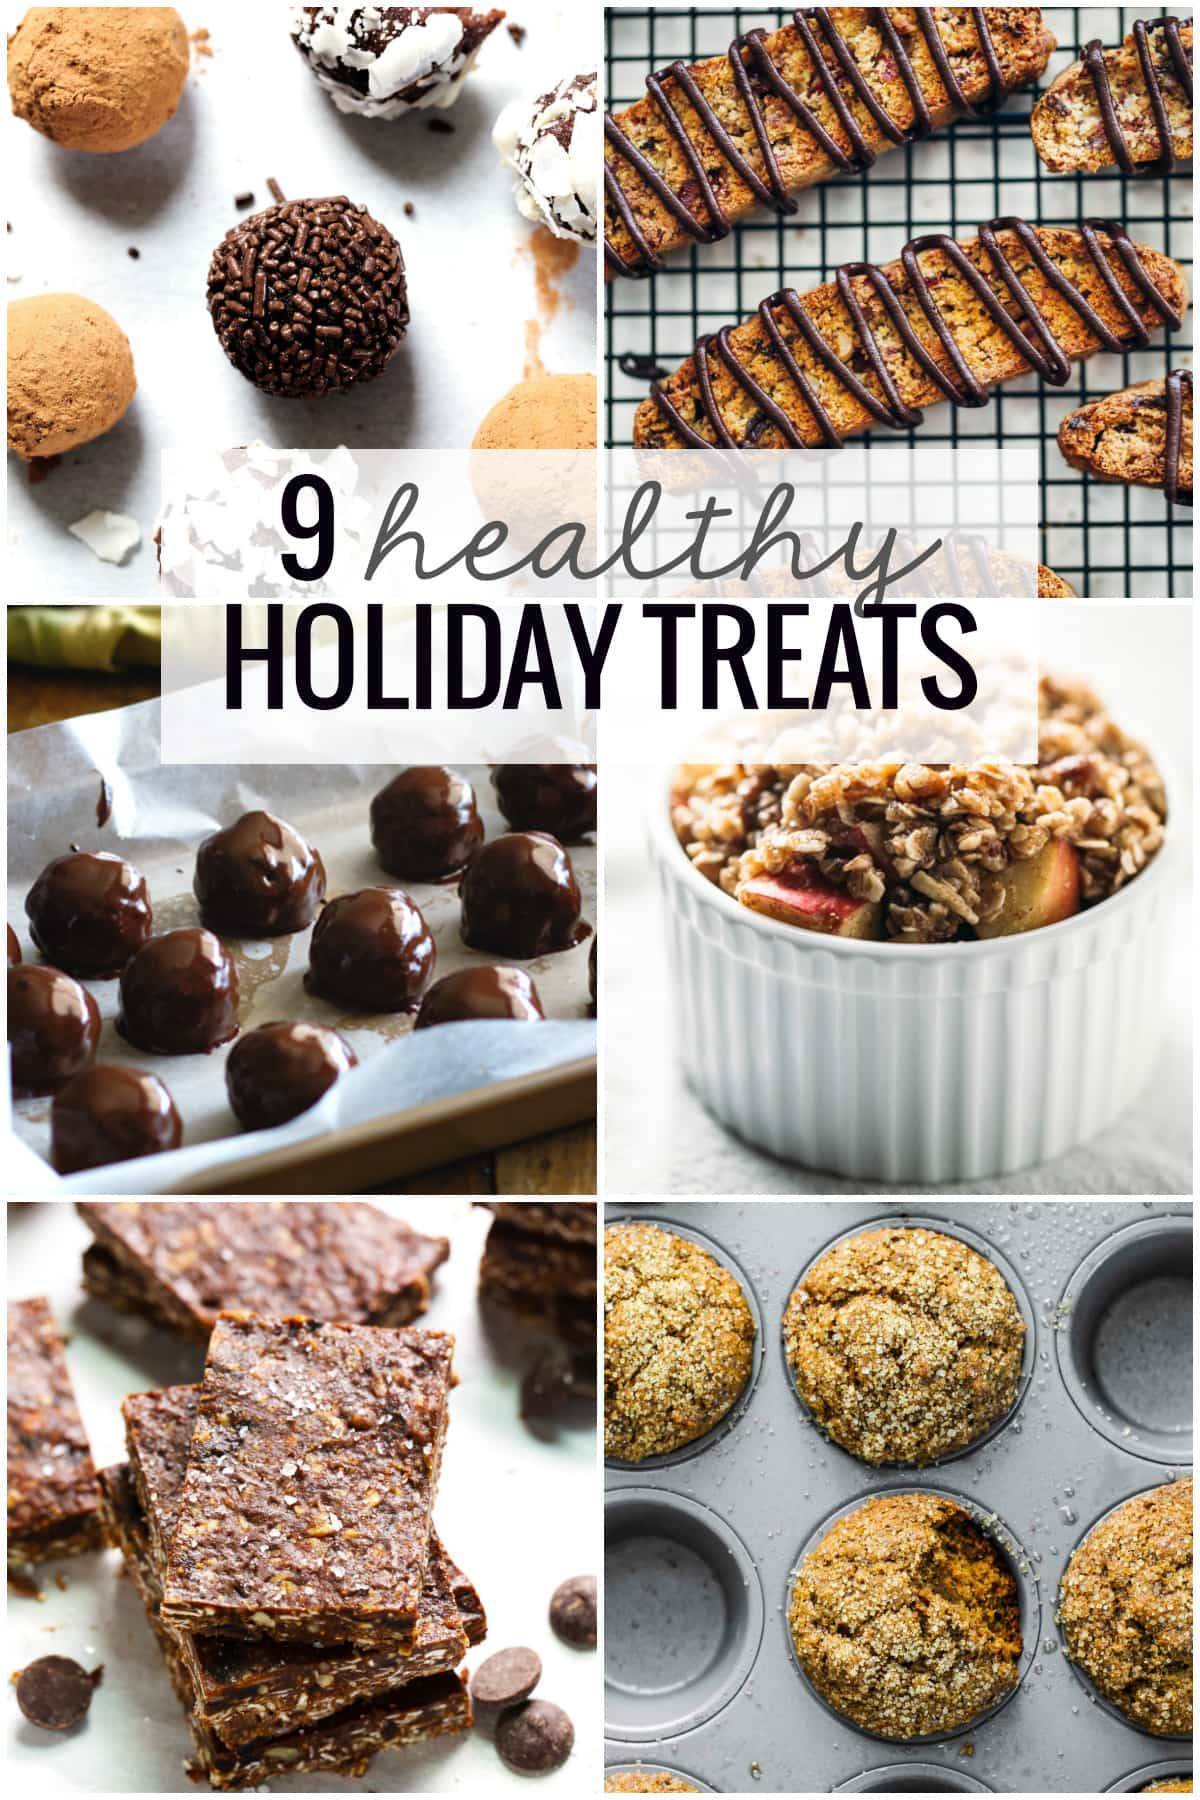 Nine healthy holiday treats collage.